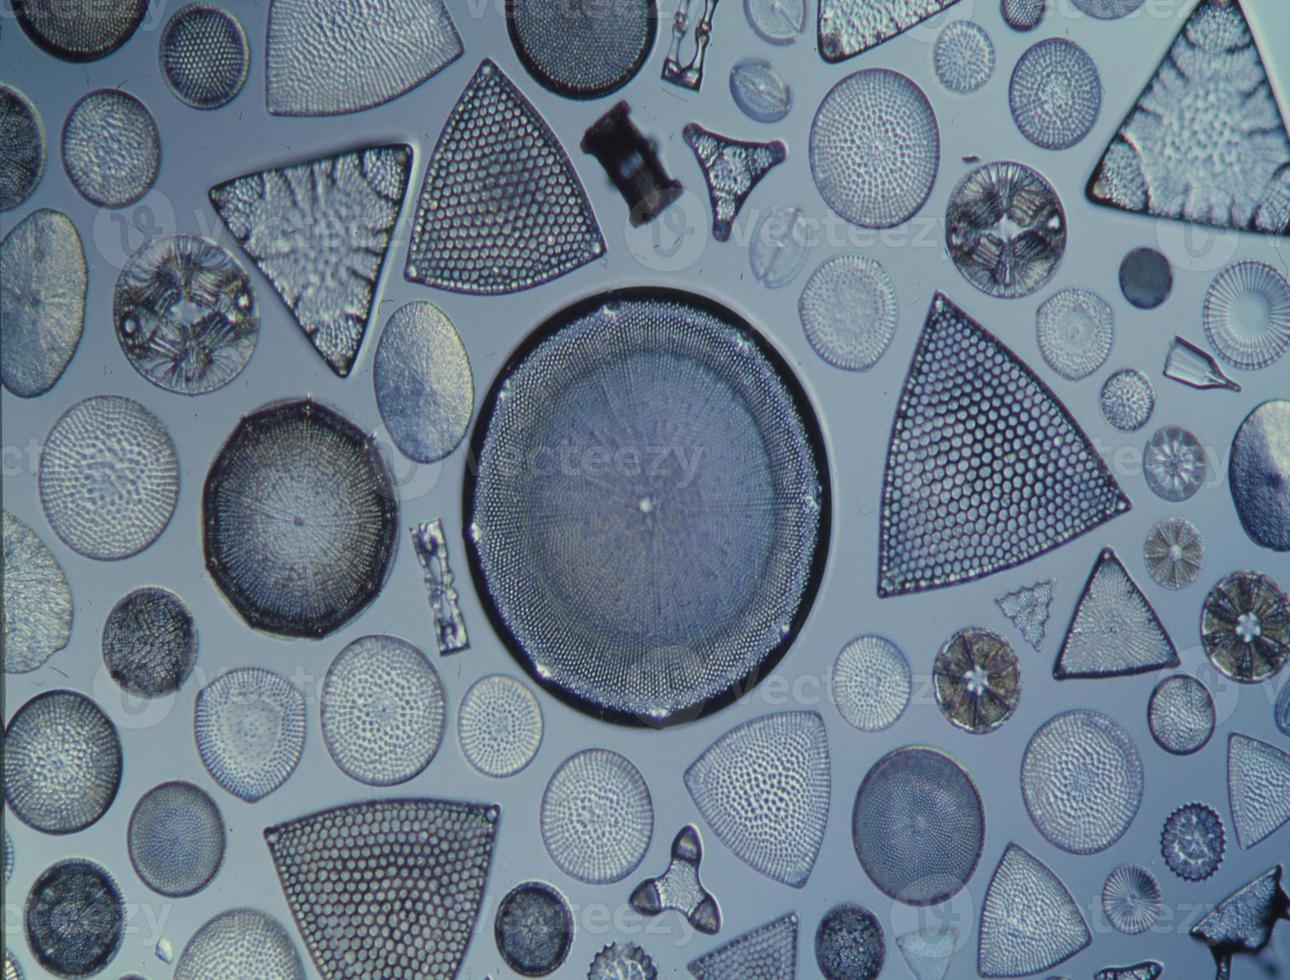 kiselalger från de hav under de mikroskop 100x foto